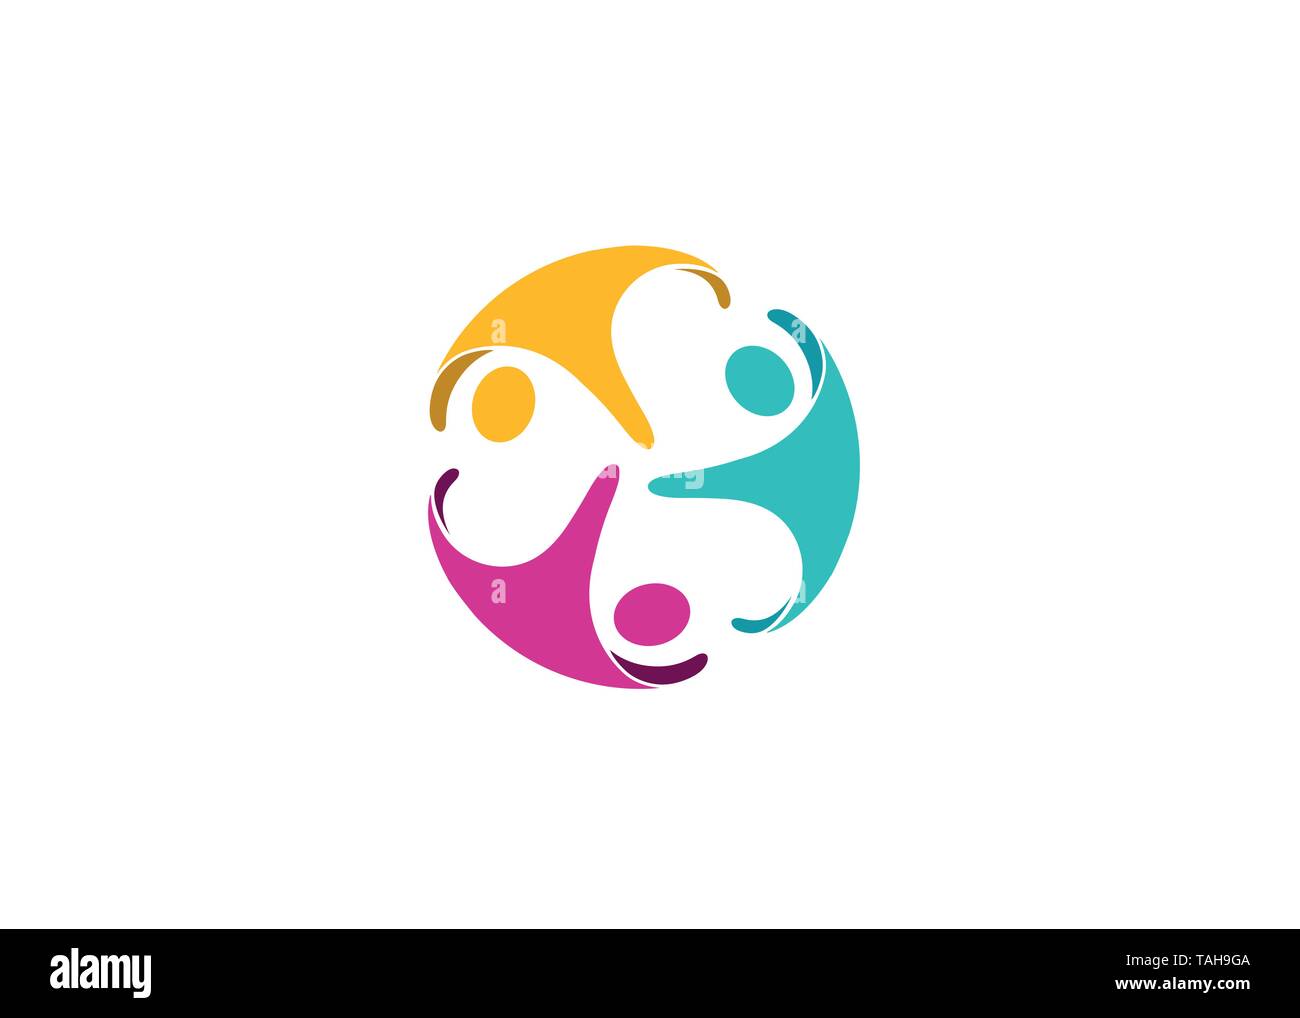 Creative Colorful Three People Logo Stock Vector